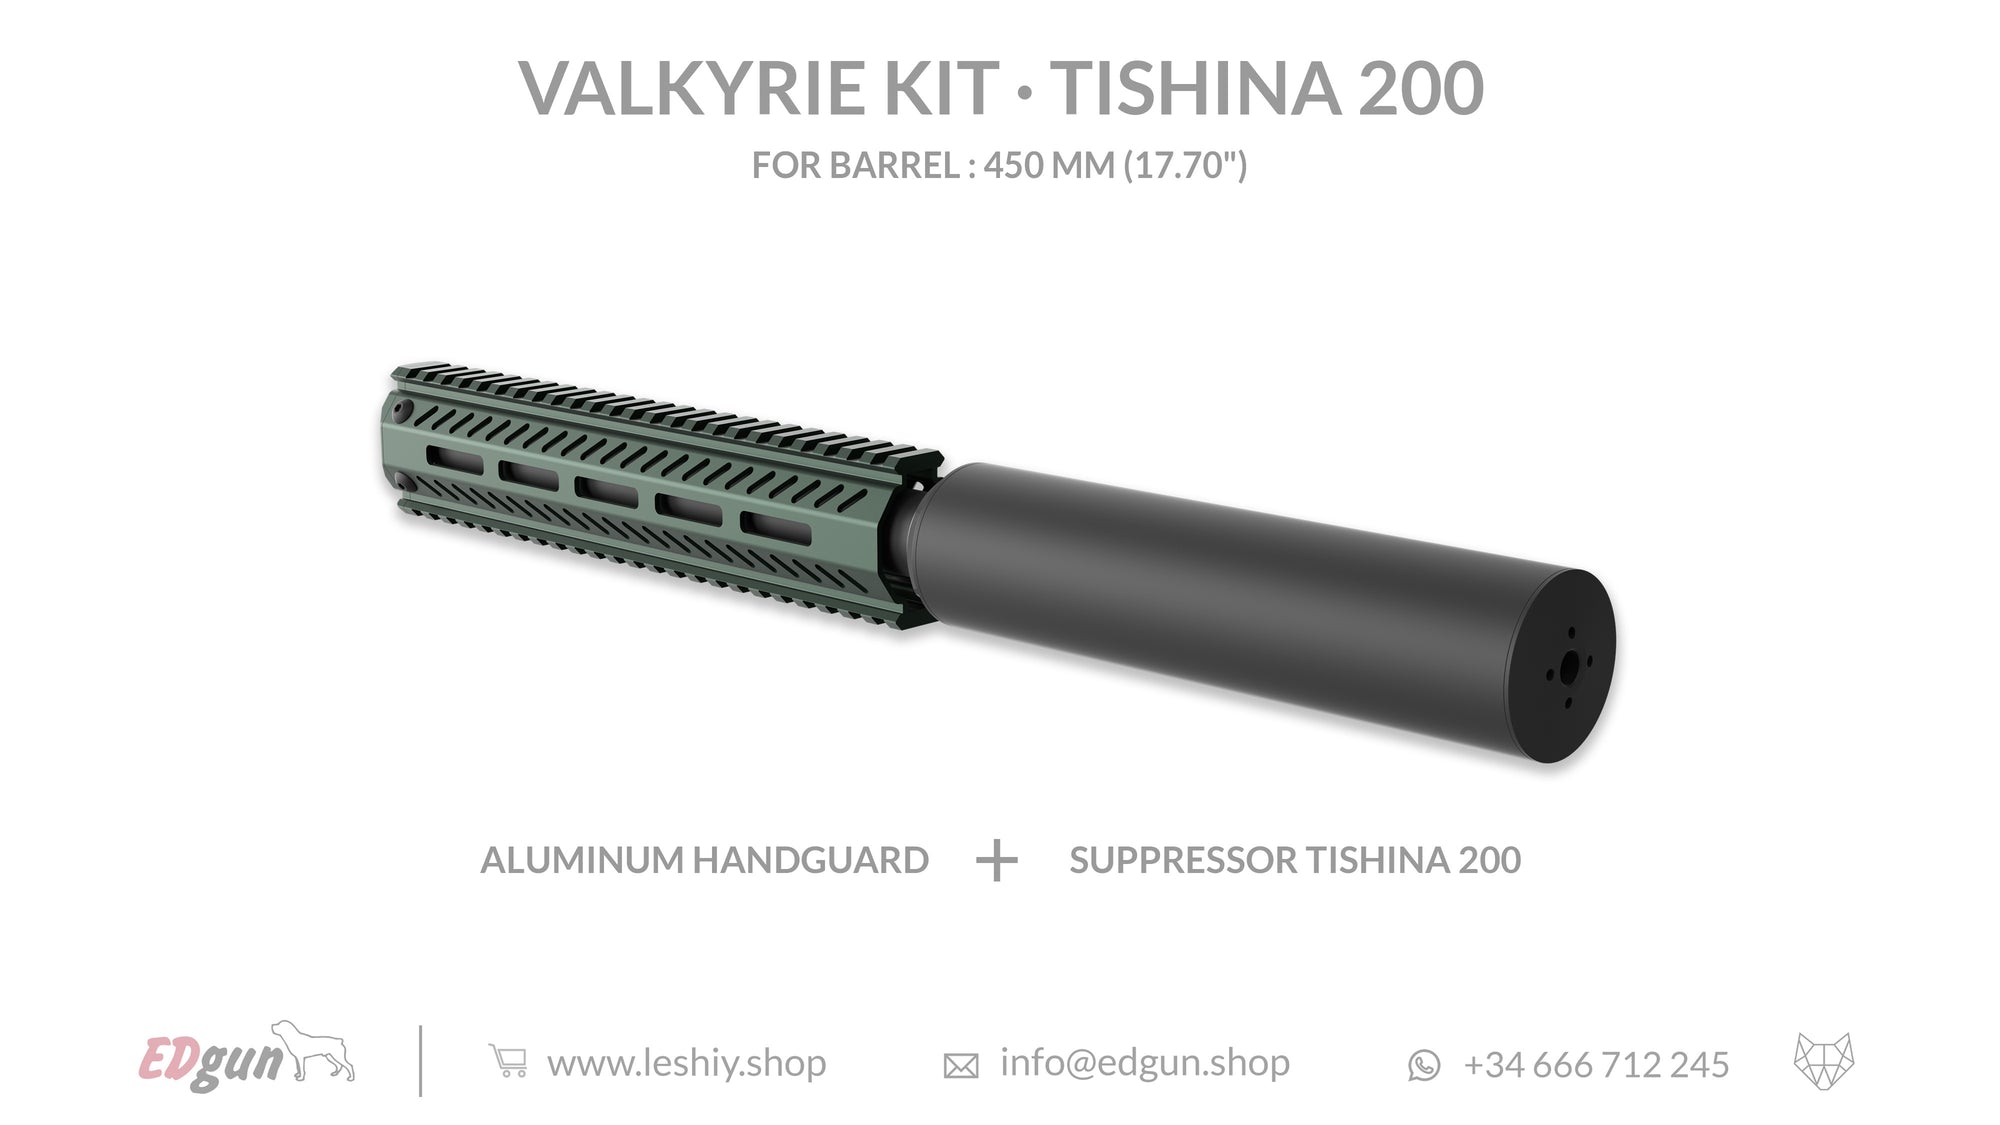 Kit Tishina 200 for barrel 450mm (17.70¨)